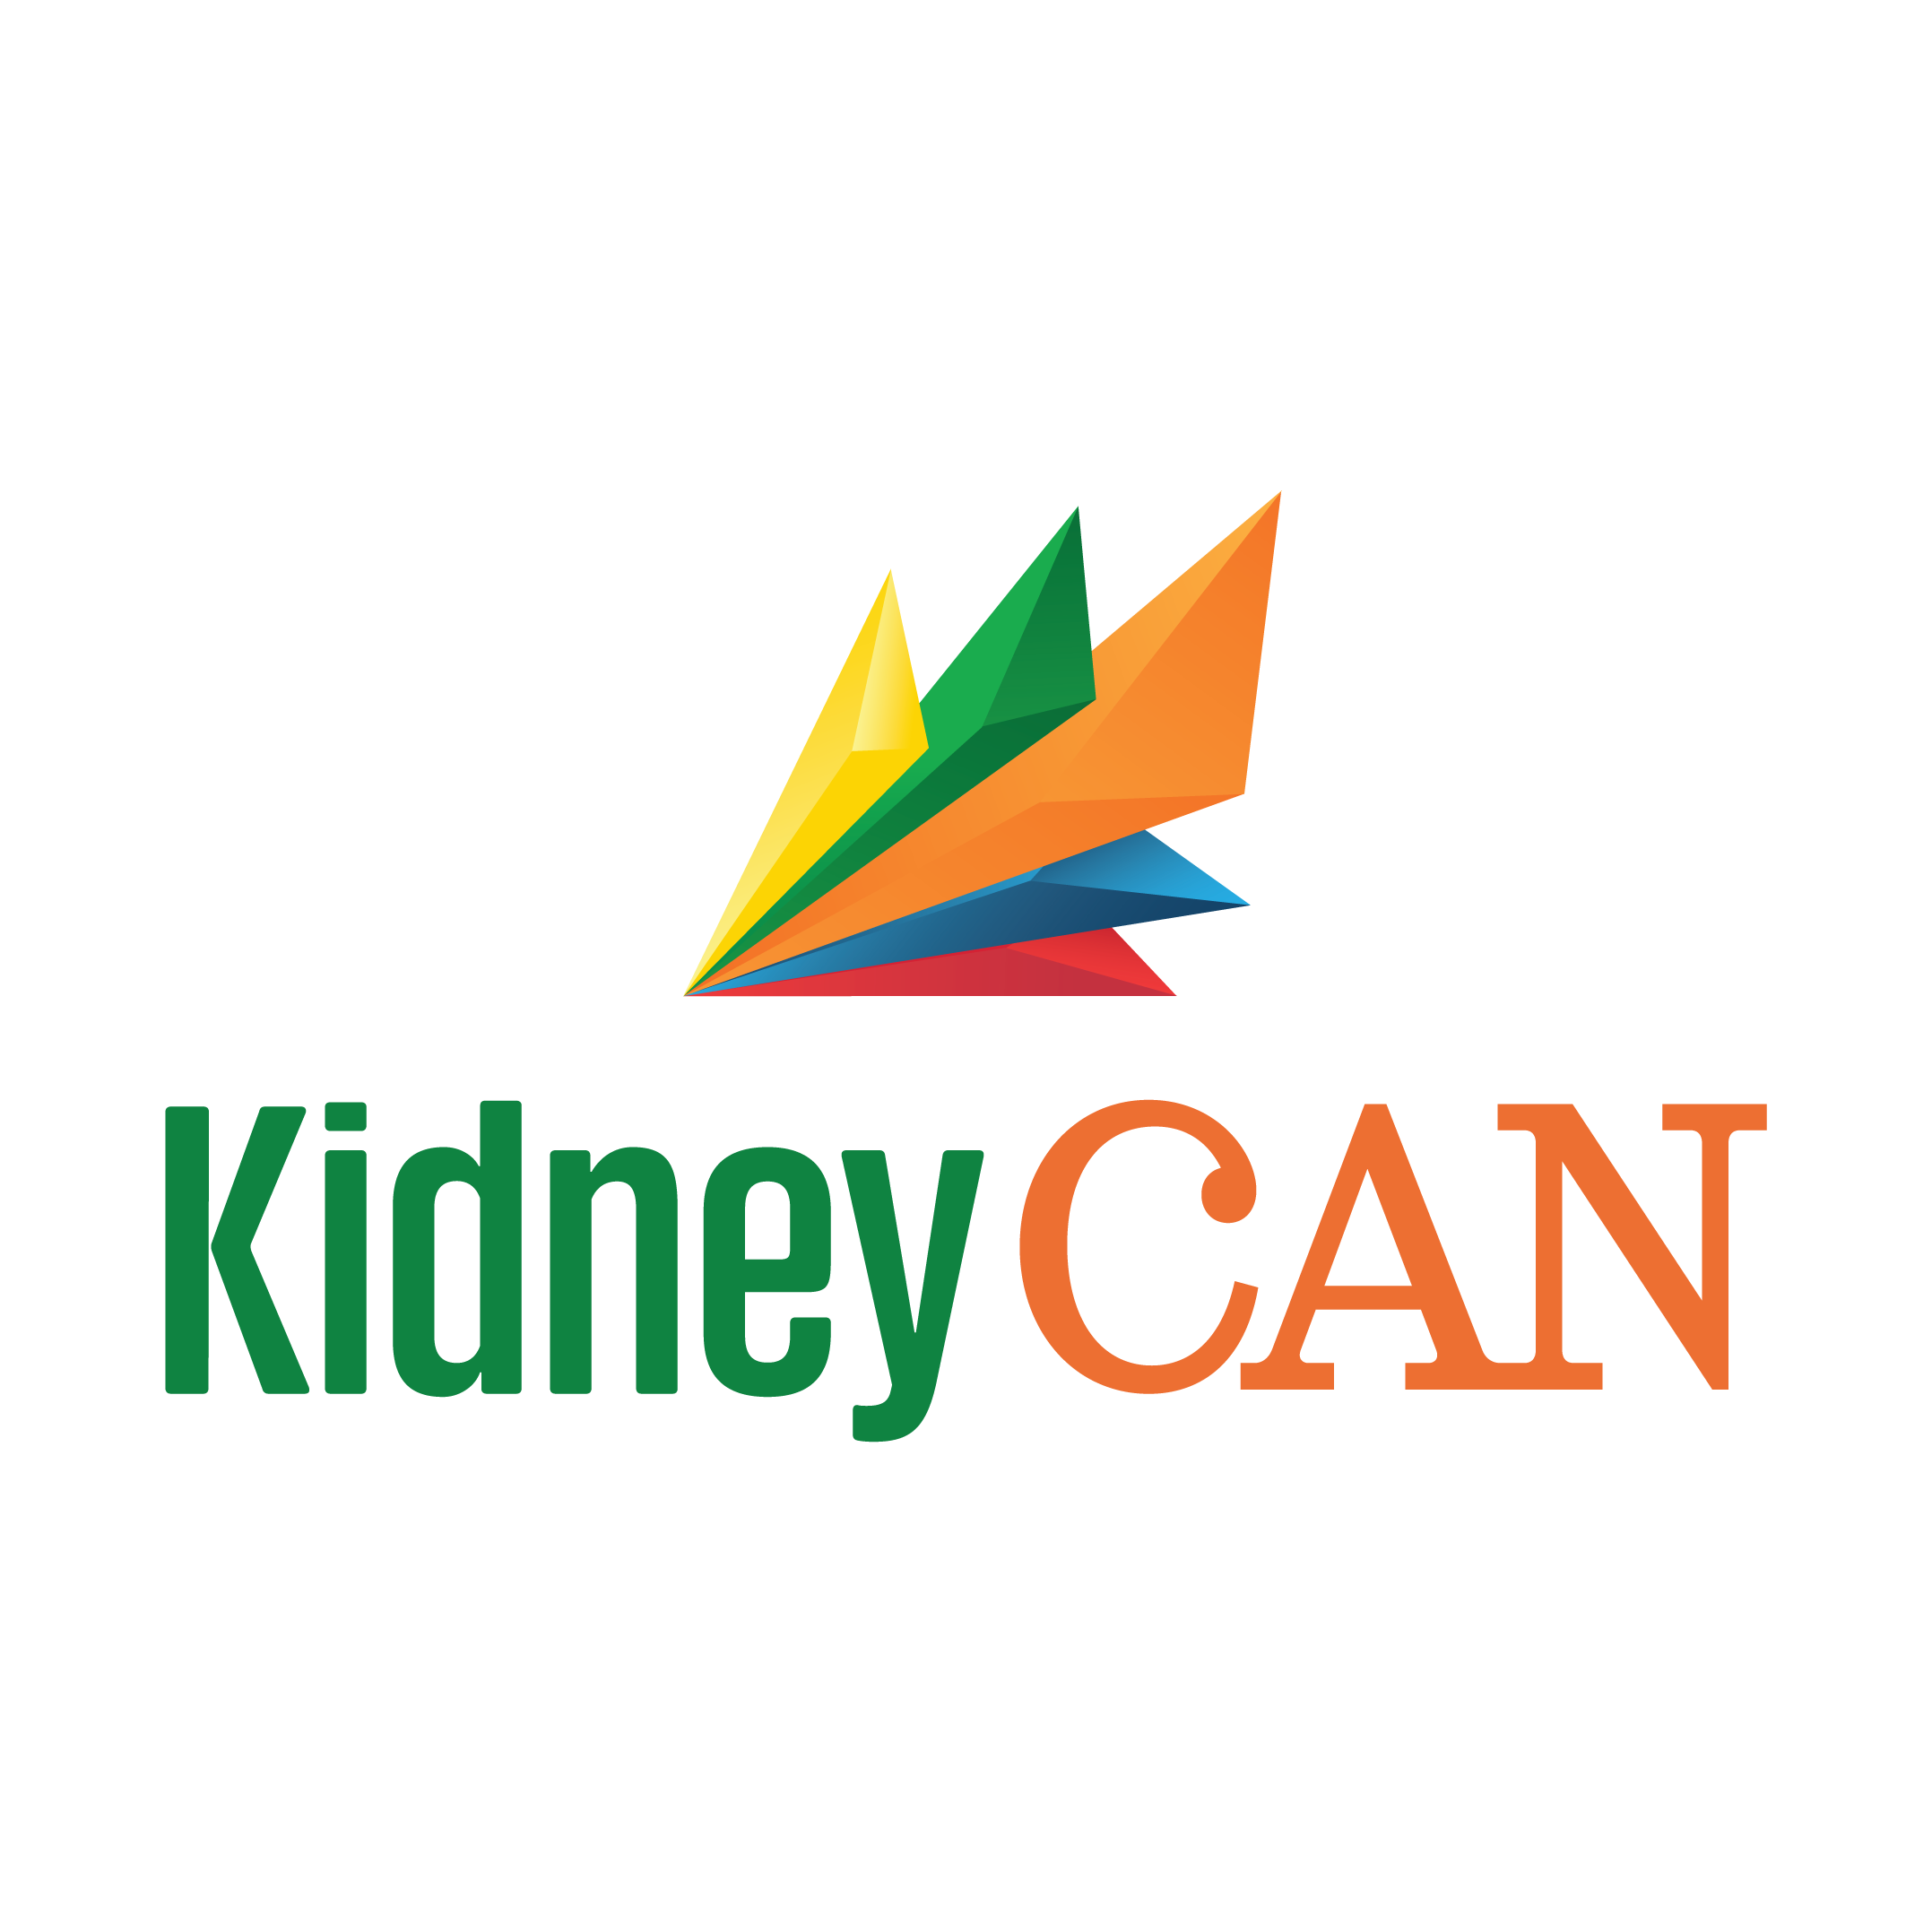 KidneyCAN logo